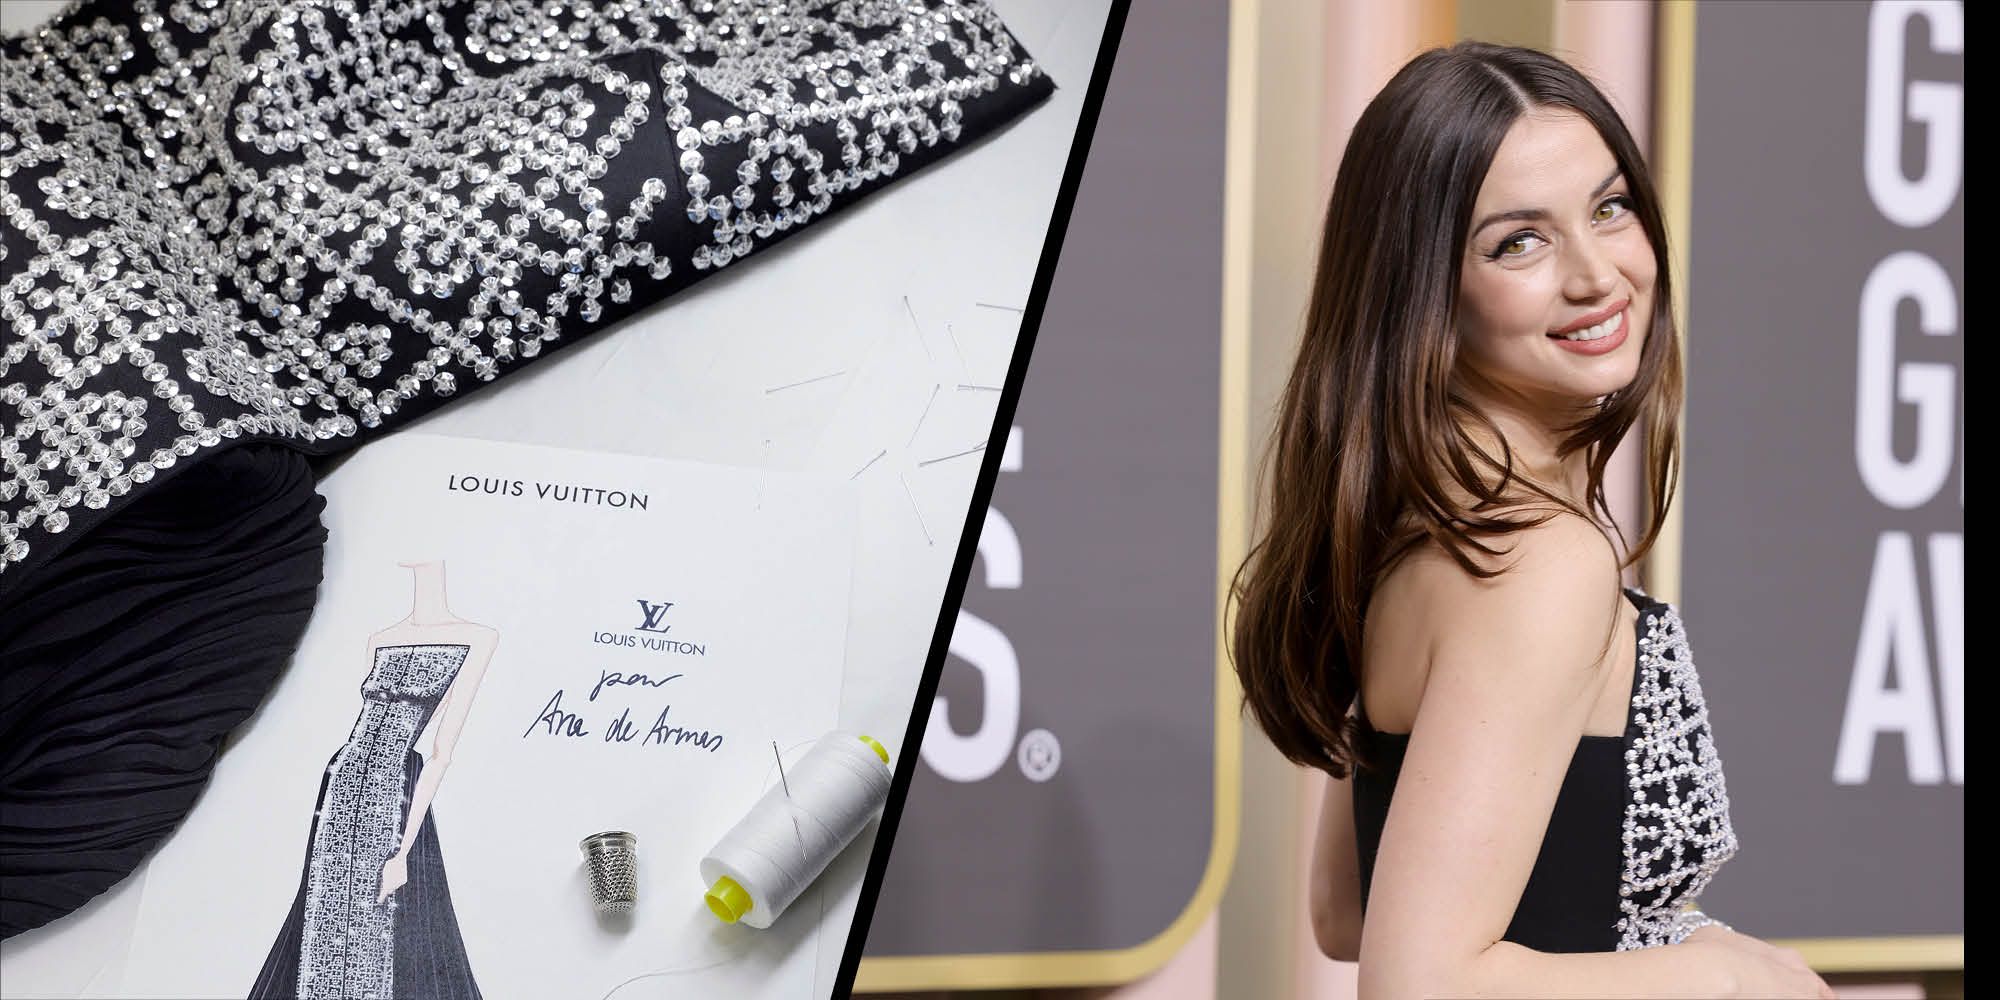 Ana de Armas's Louis Vuitton Dress at the 2023 Oscars